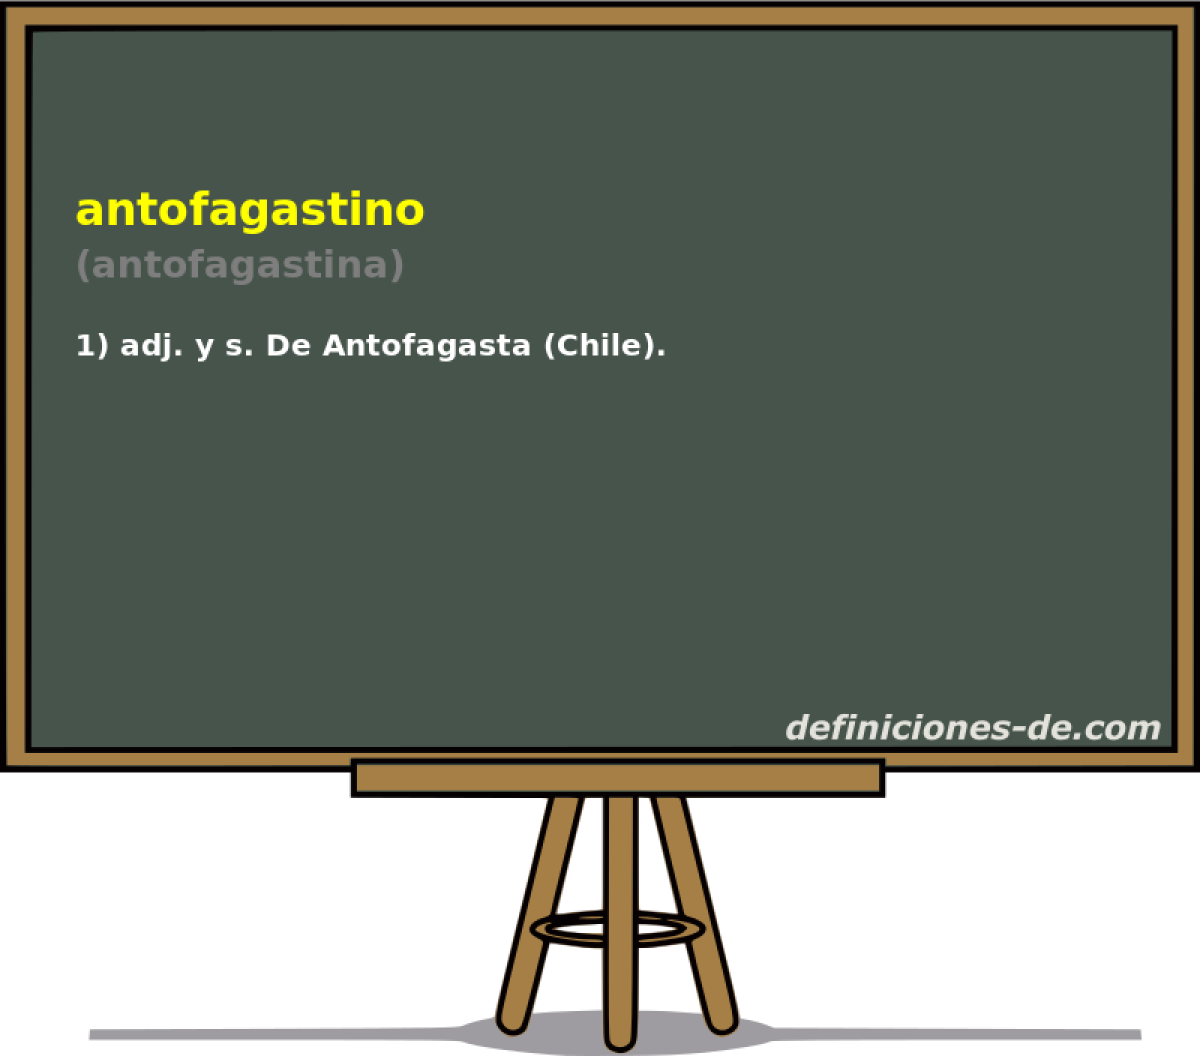 antofagastino (antofagastina)